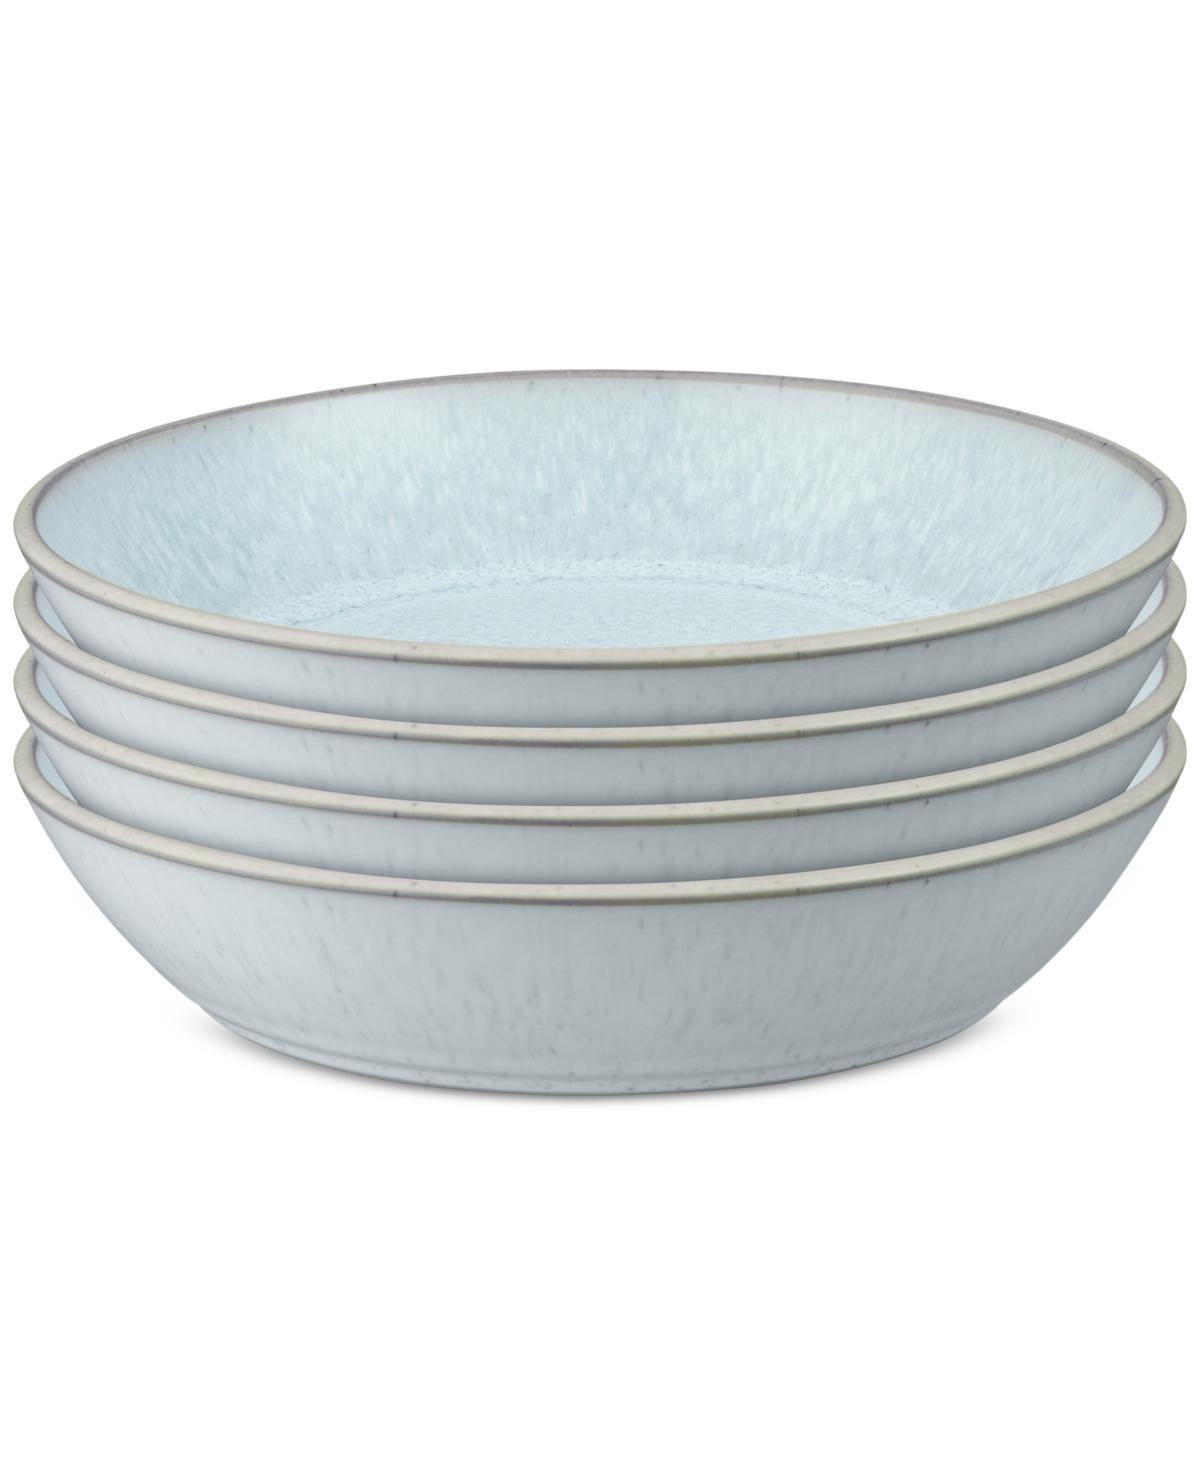 Kiln Collection Stoneware Pasta Bowls, Set of 4 - Blue